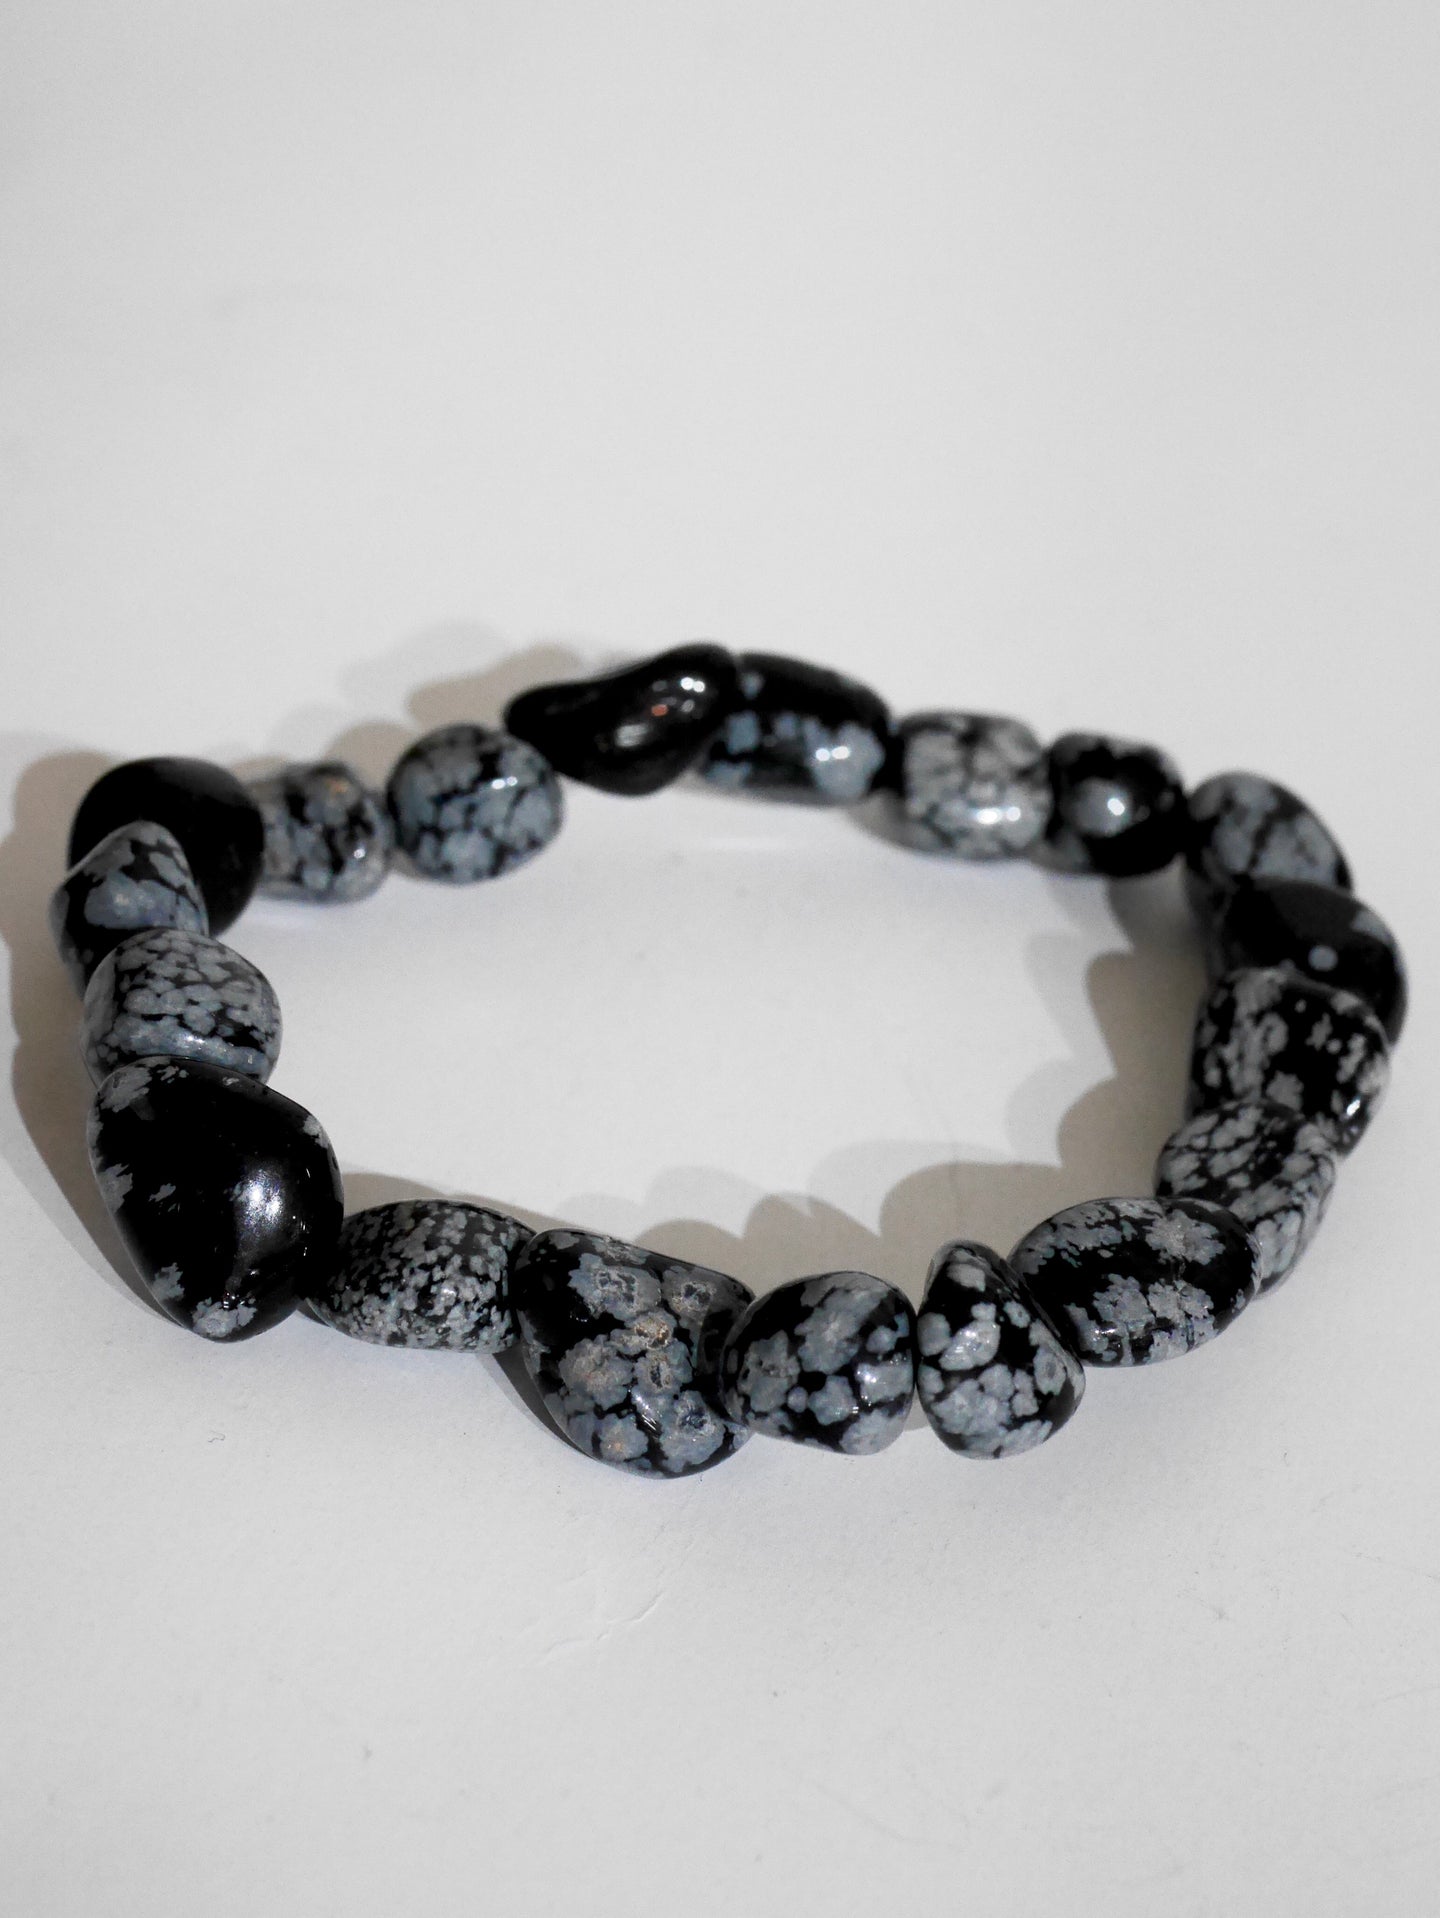 Snowflake obsidian tumbled bracelet